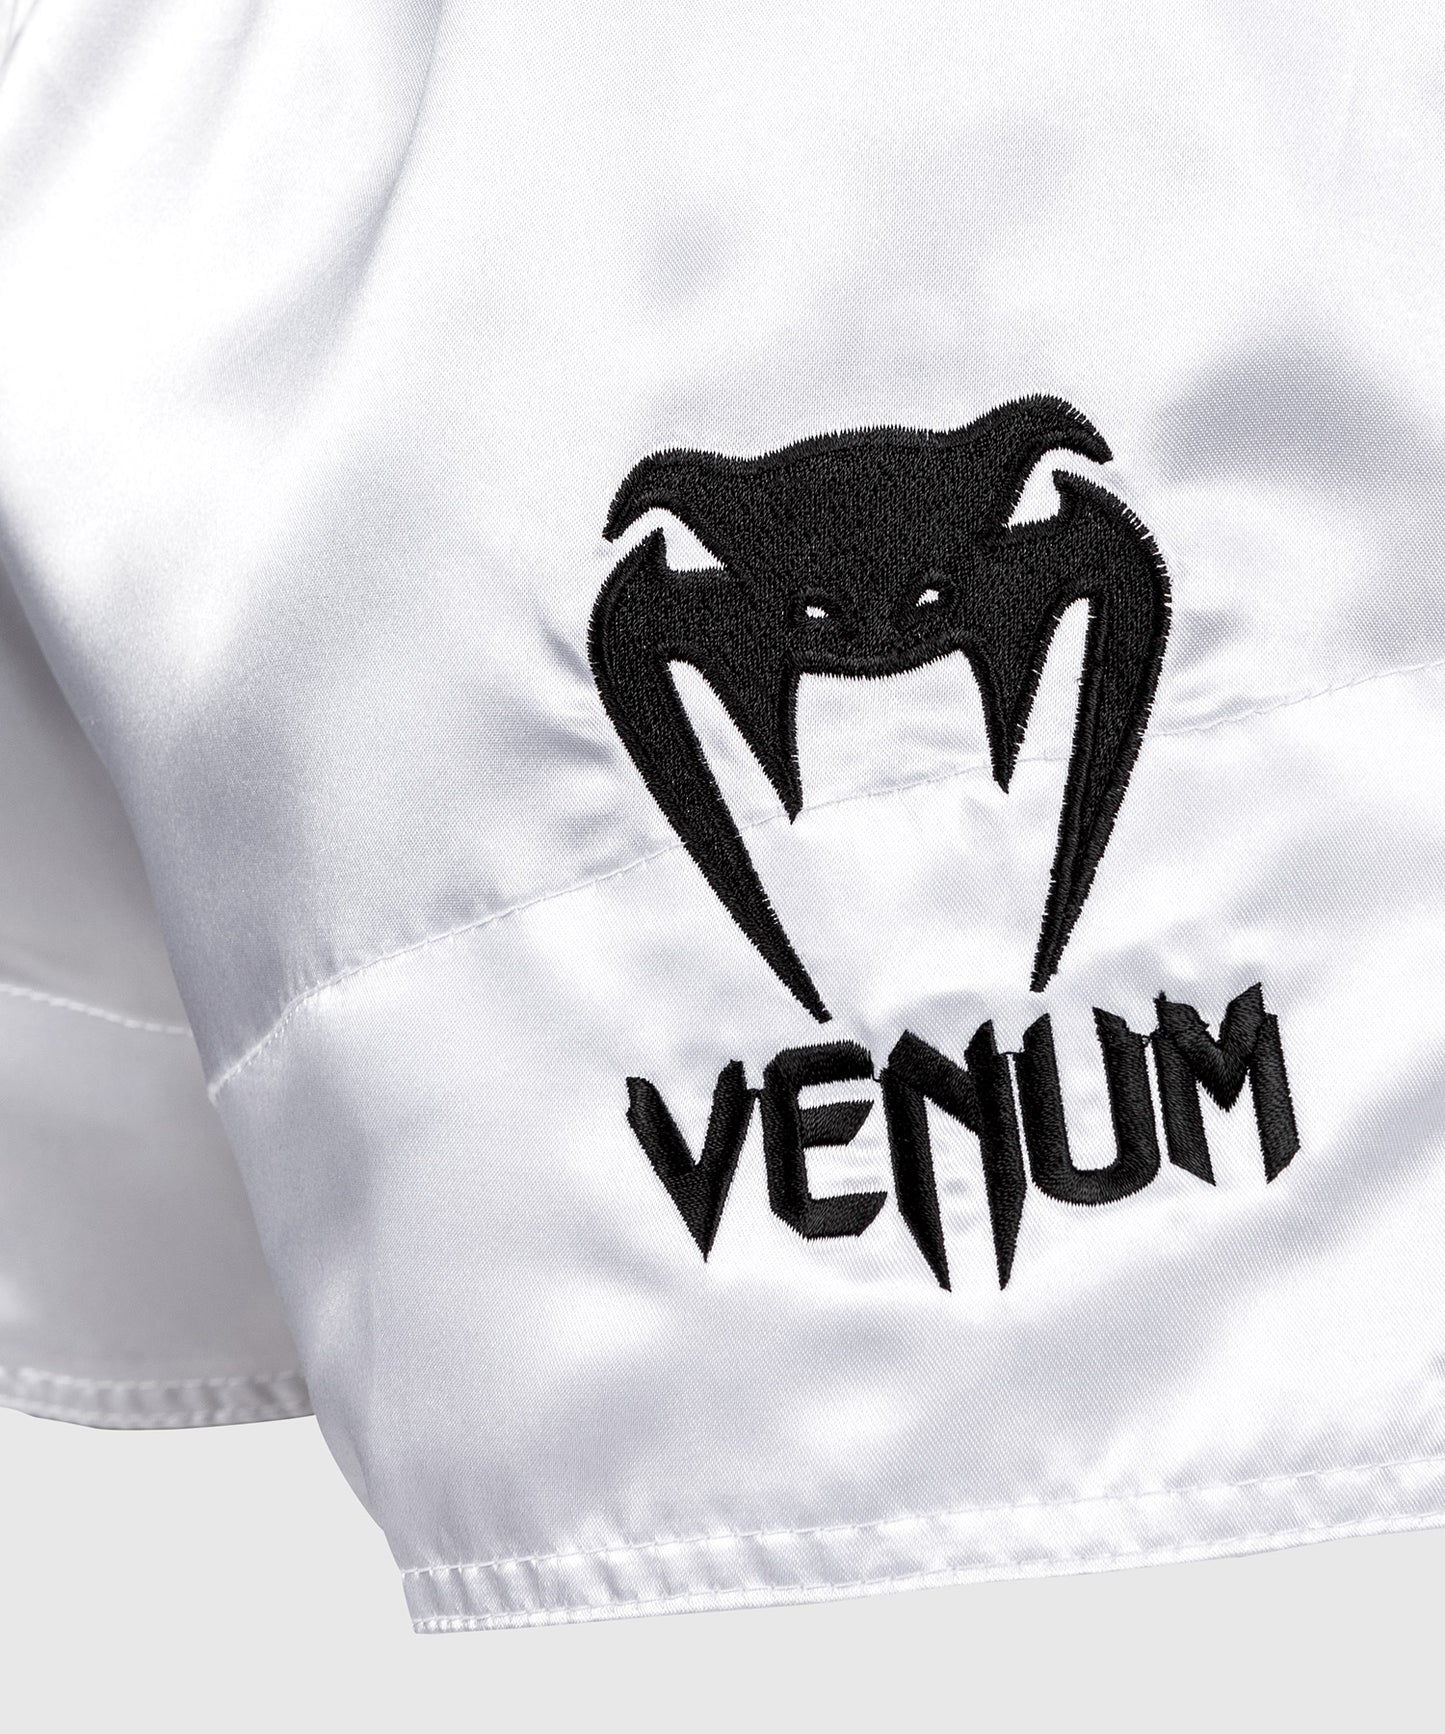 Venum Classic Muay Thai-short - wit/zwart